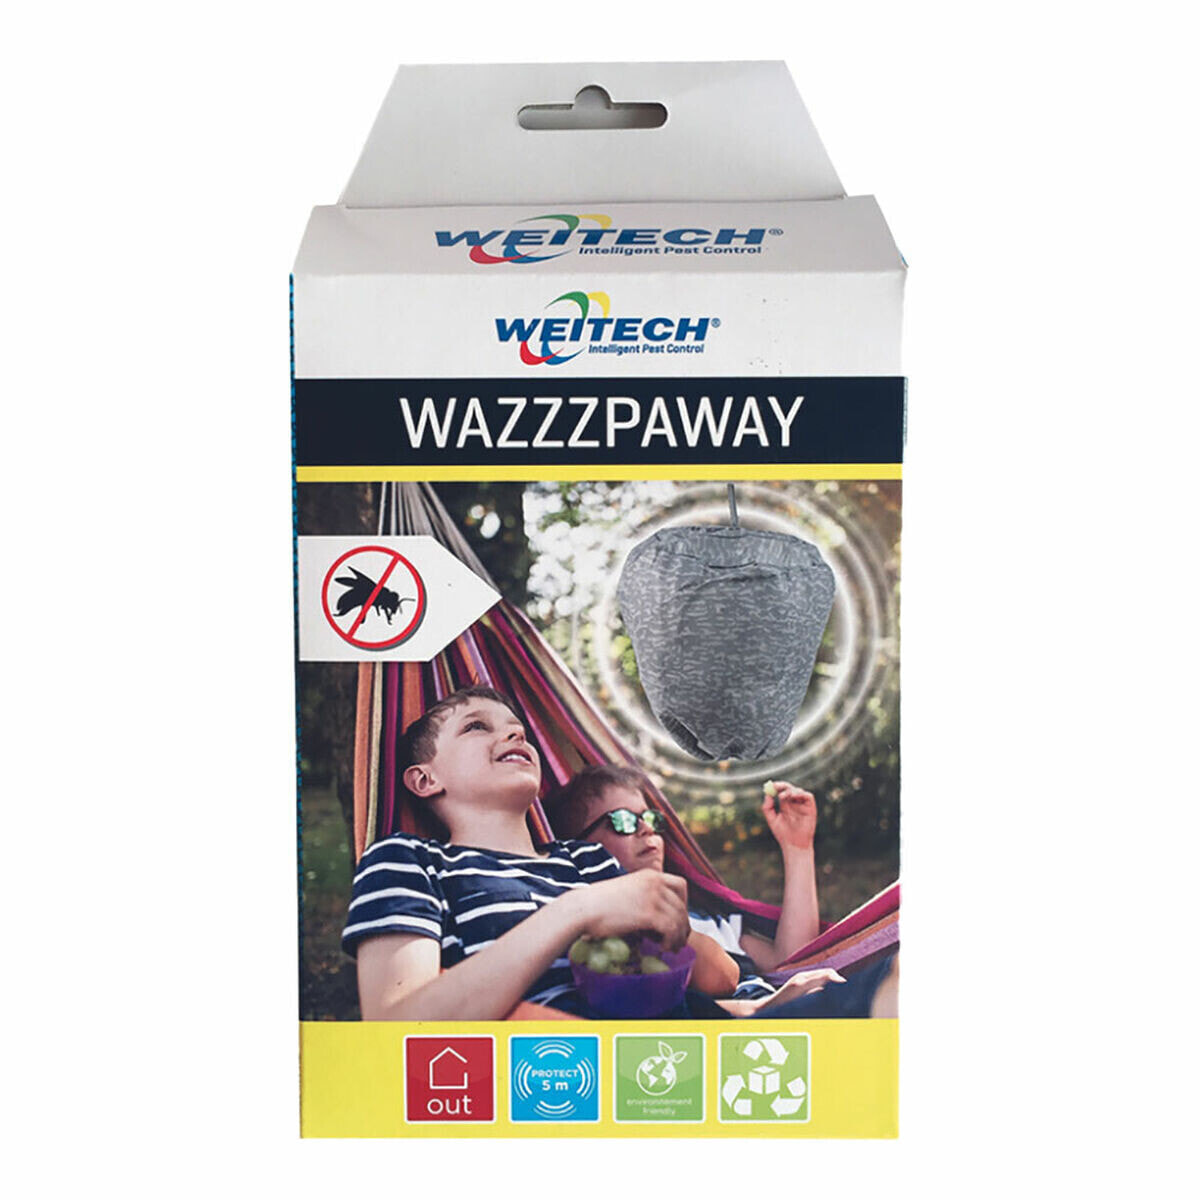 Repeller Weitech Wazzzpaway Wasps